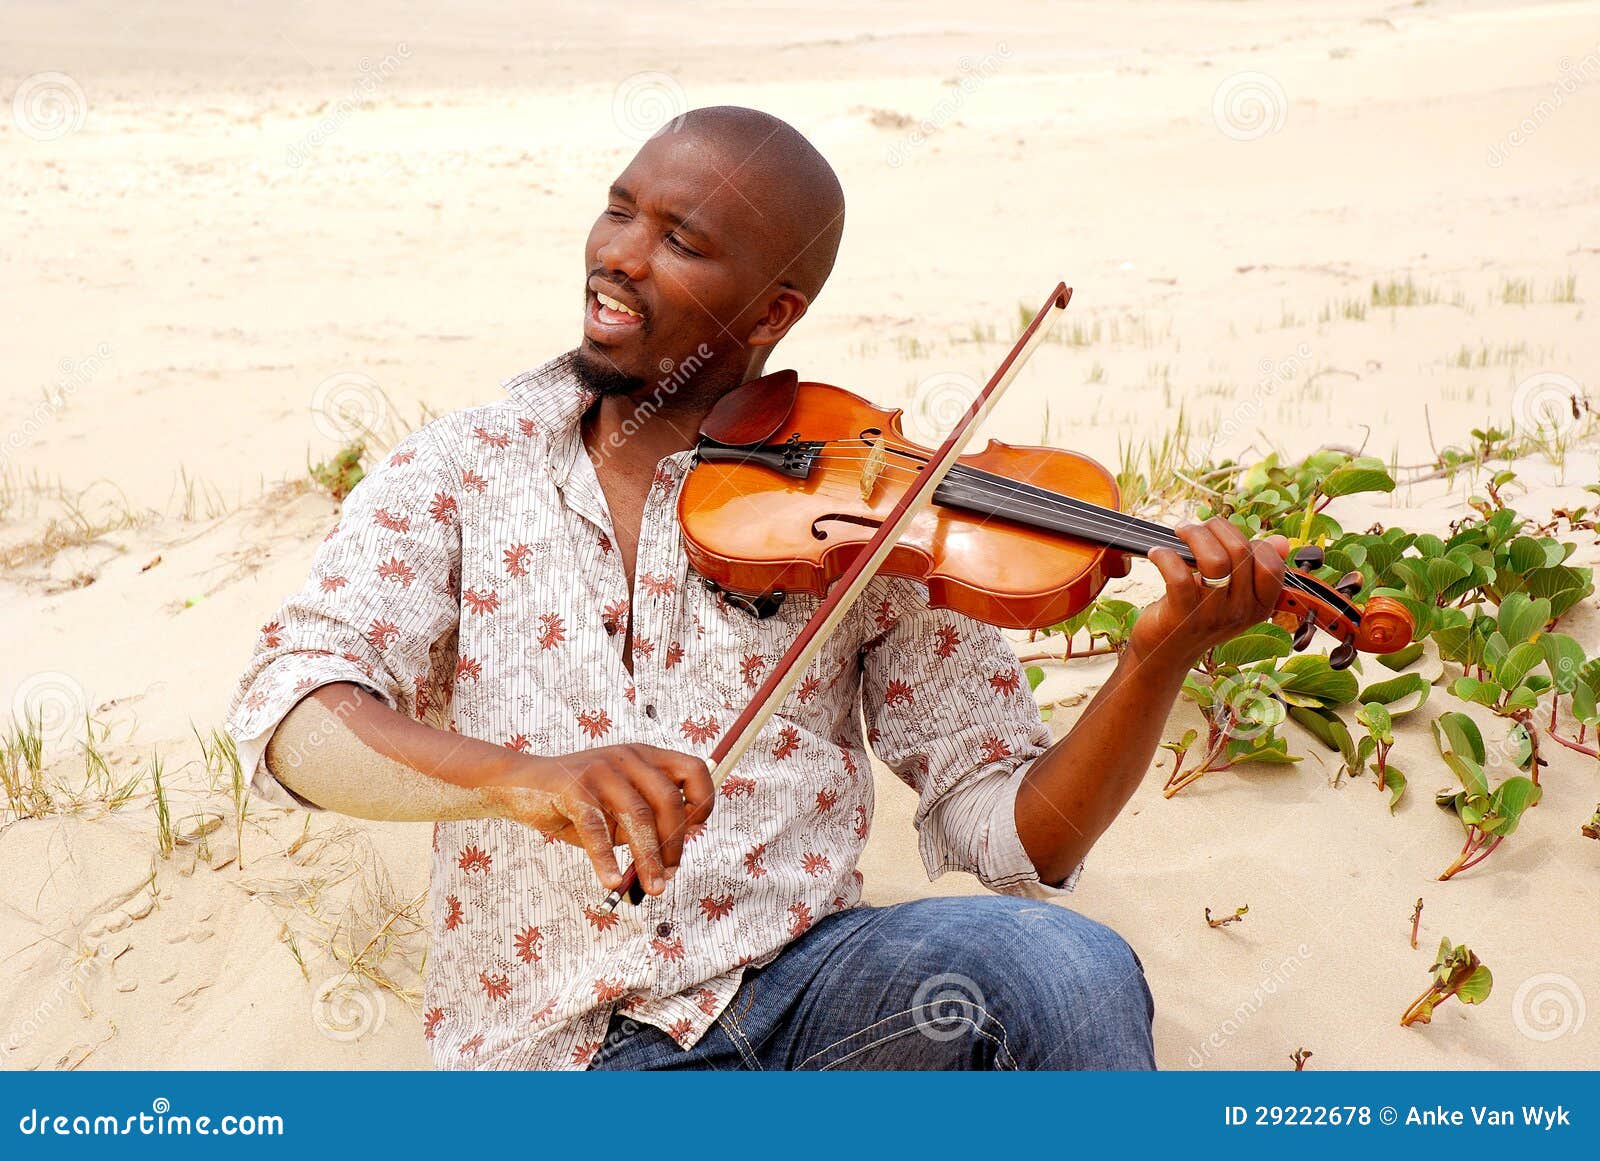 beach musician portrait